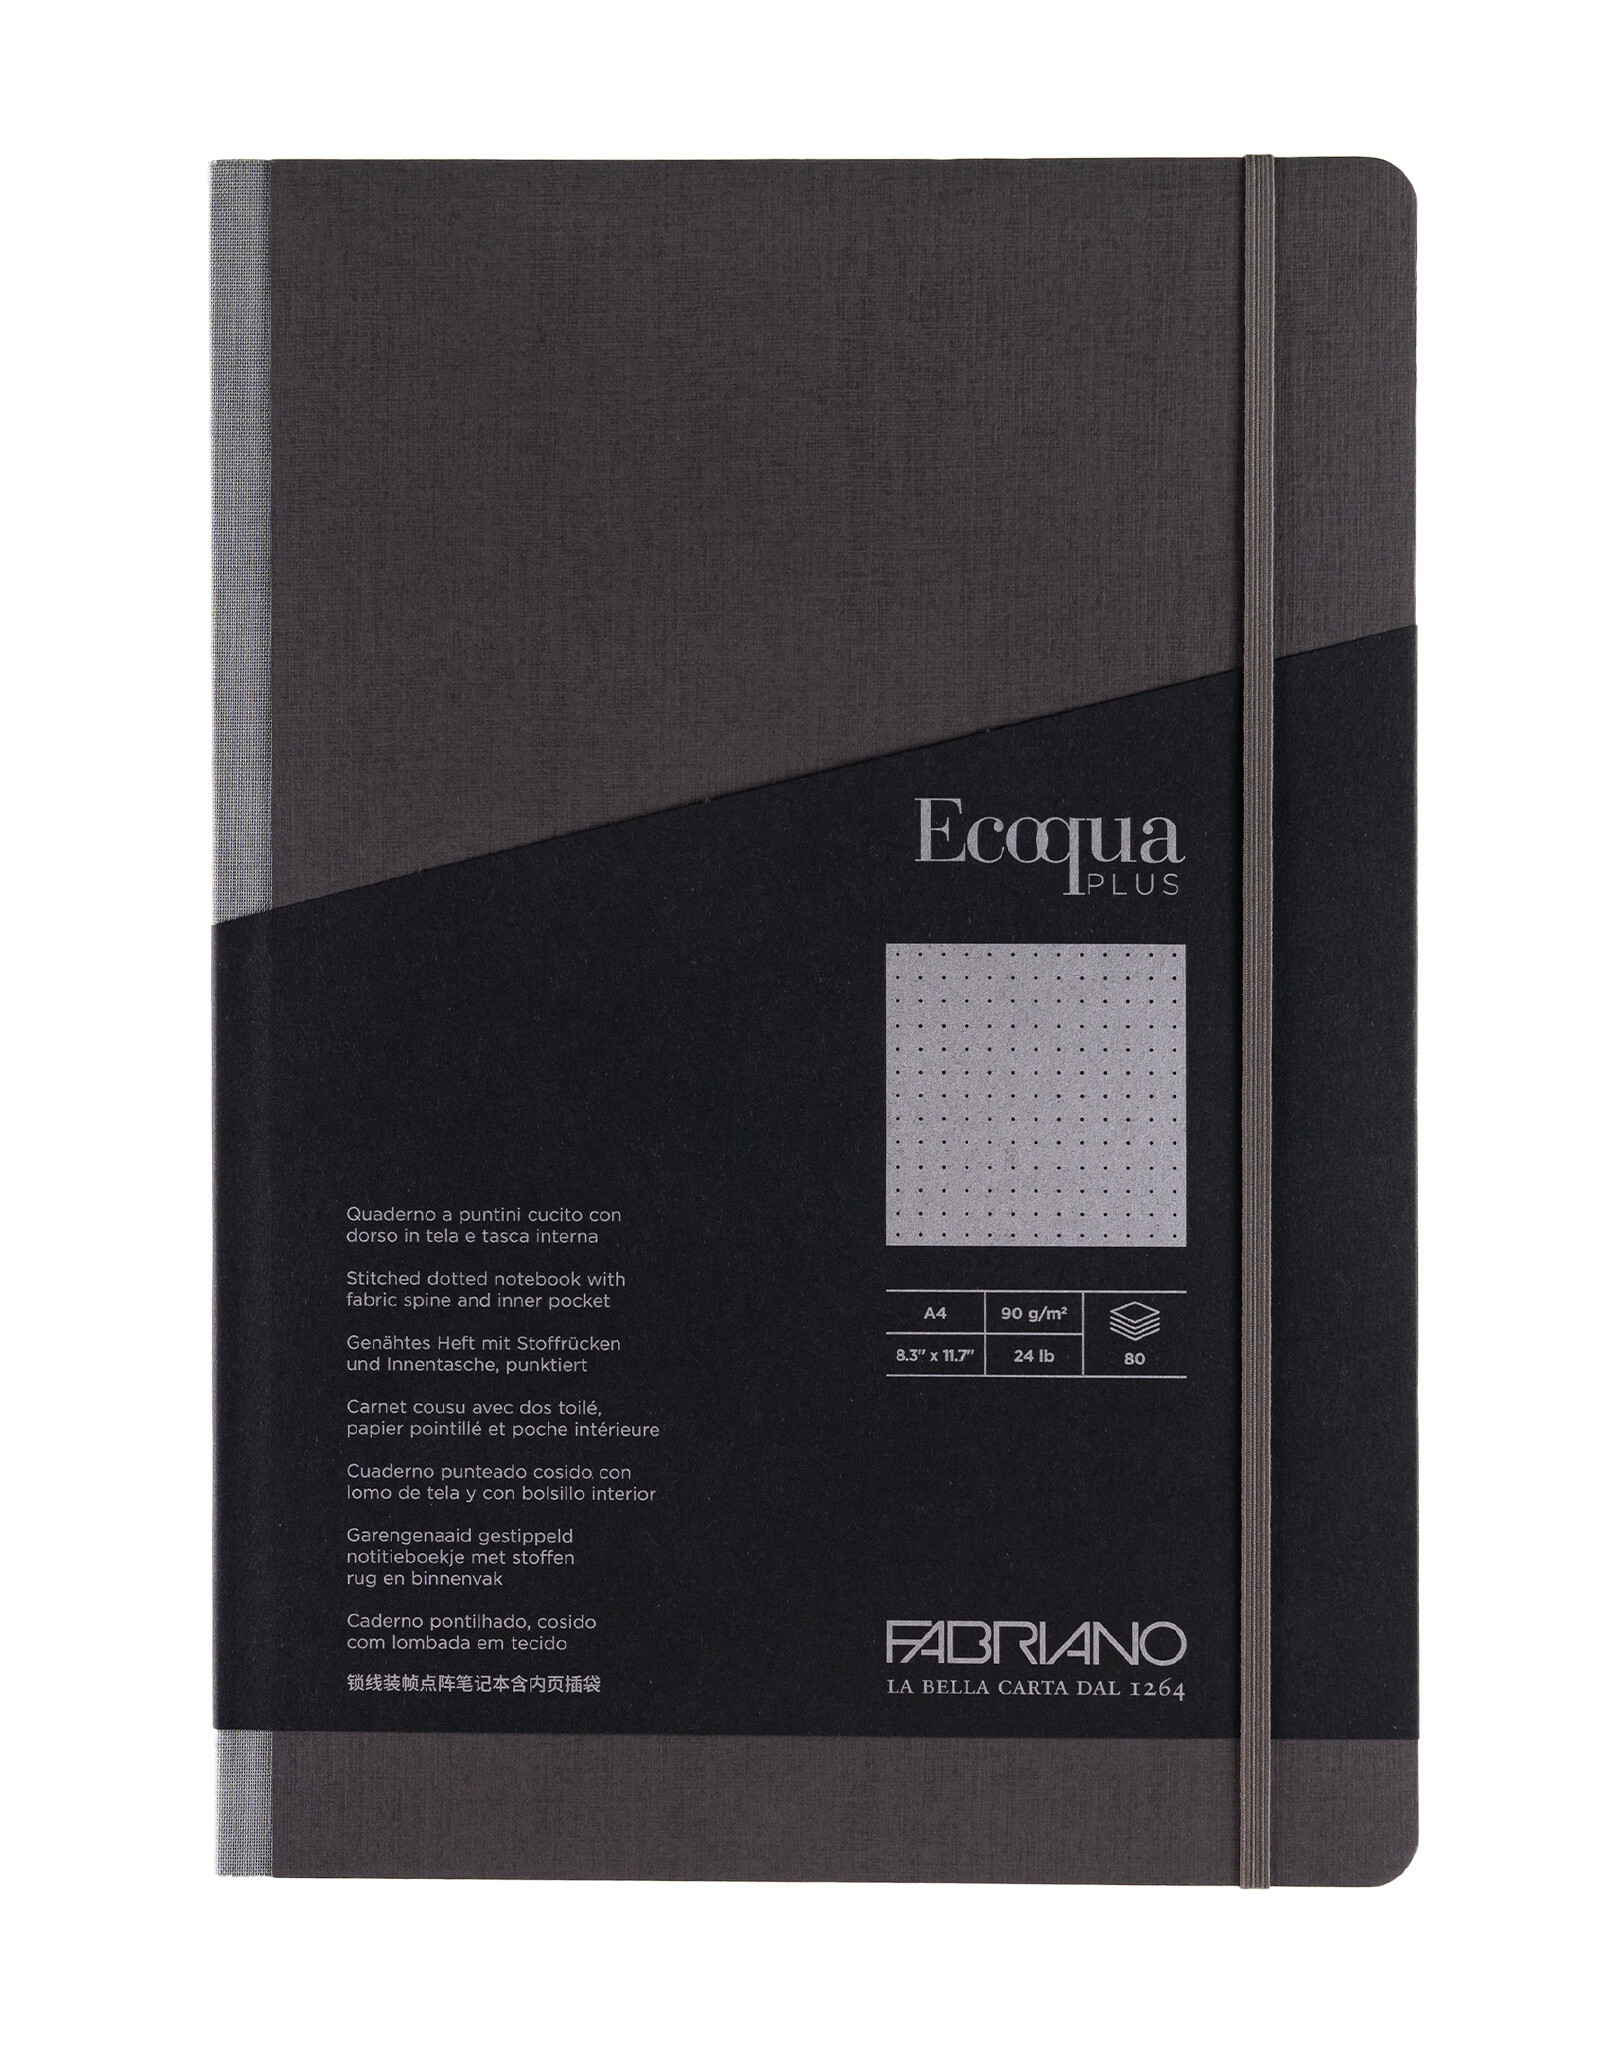 Ecoqua Plus Fabric Bound Notebook, Grey, A4, Dotted